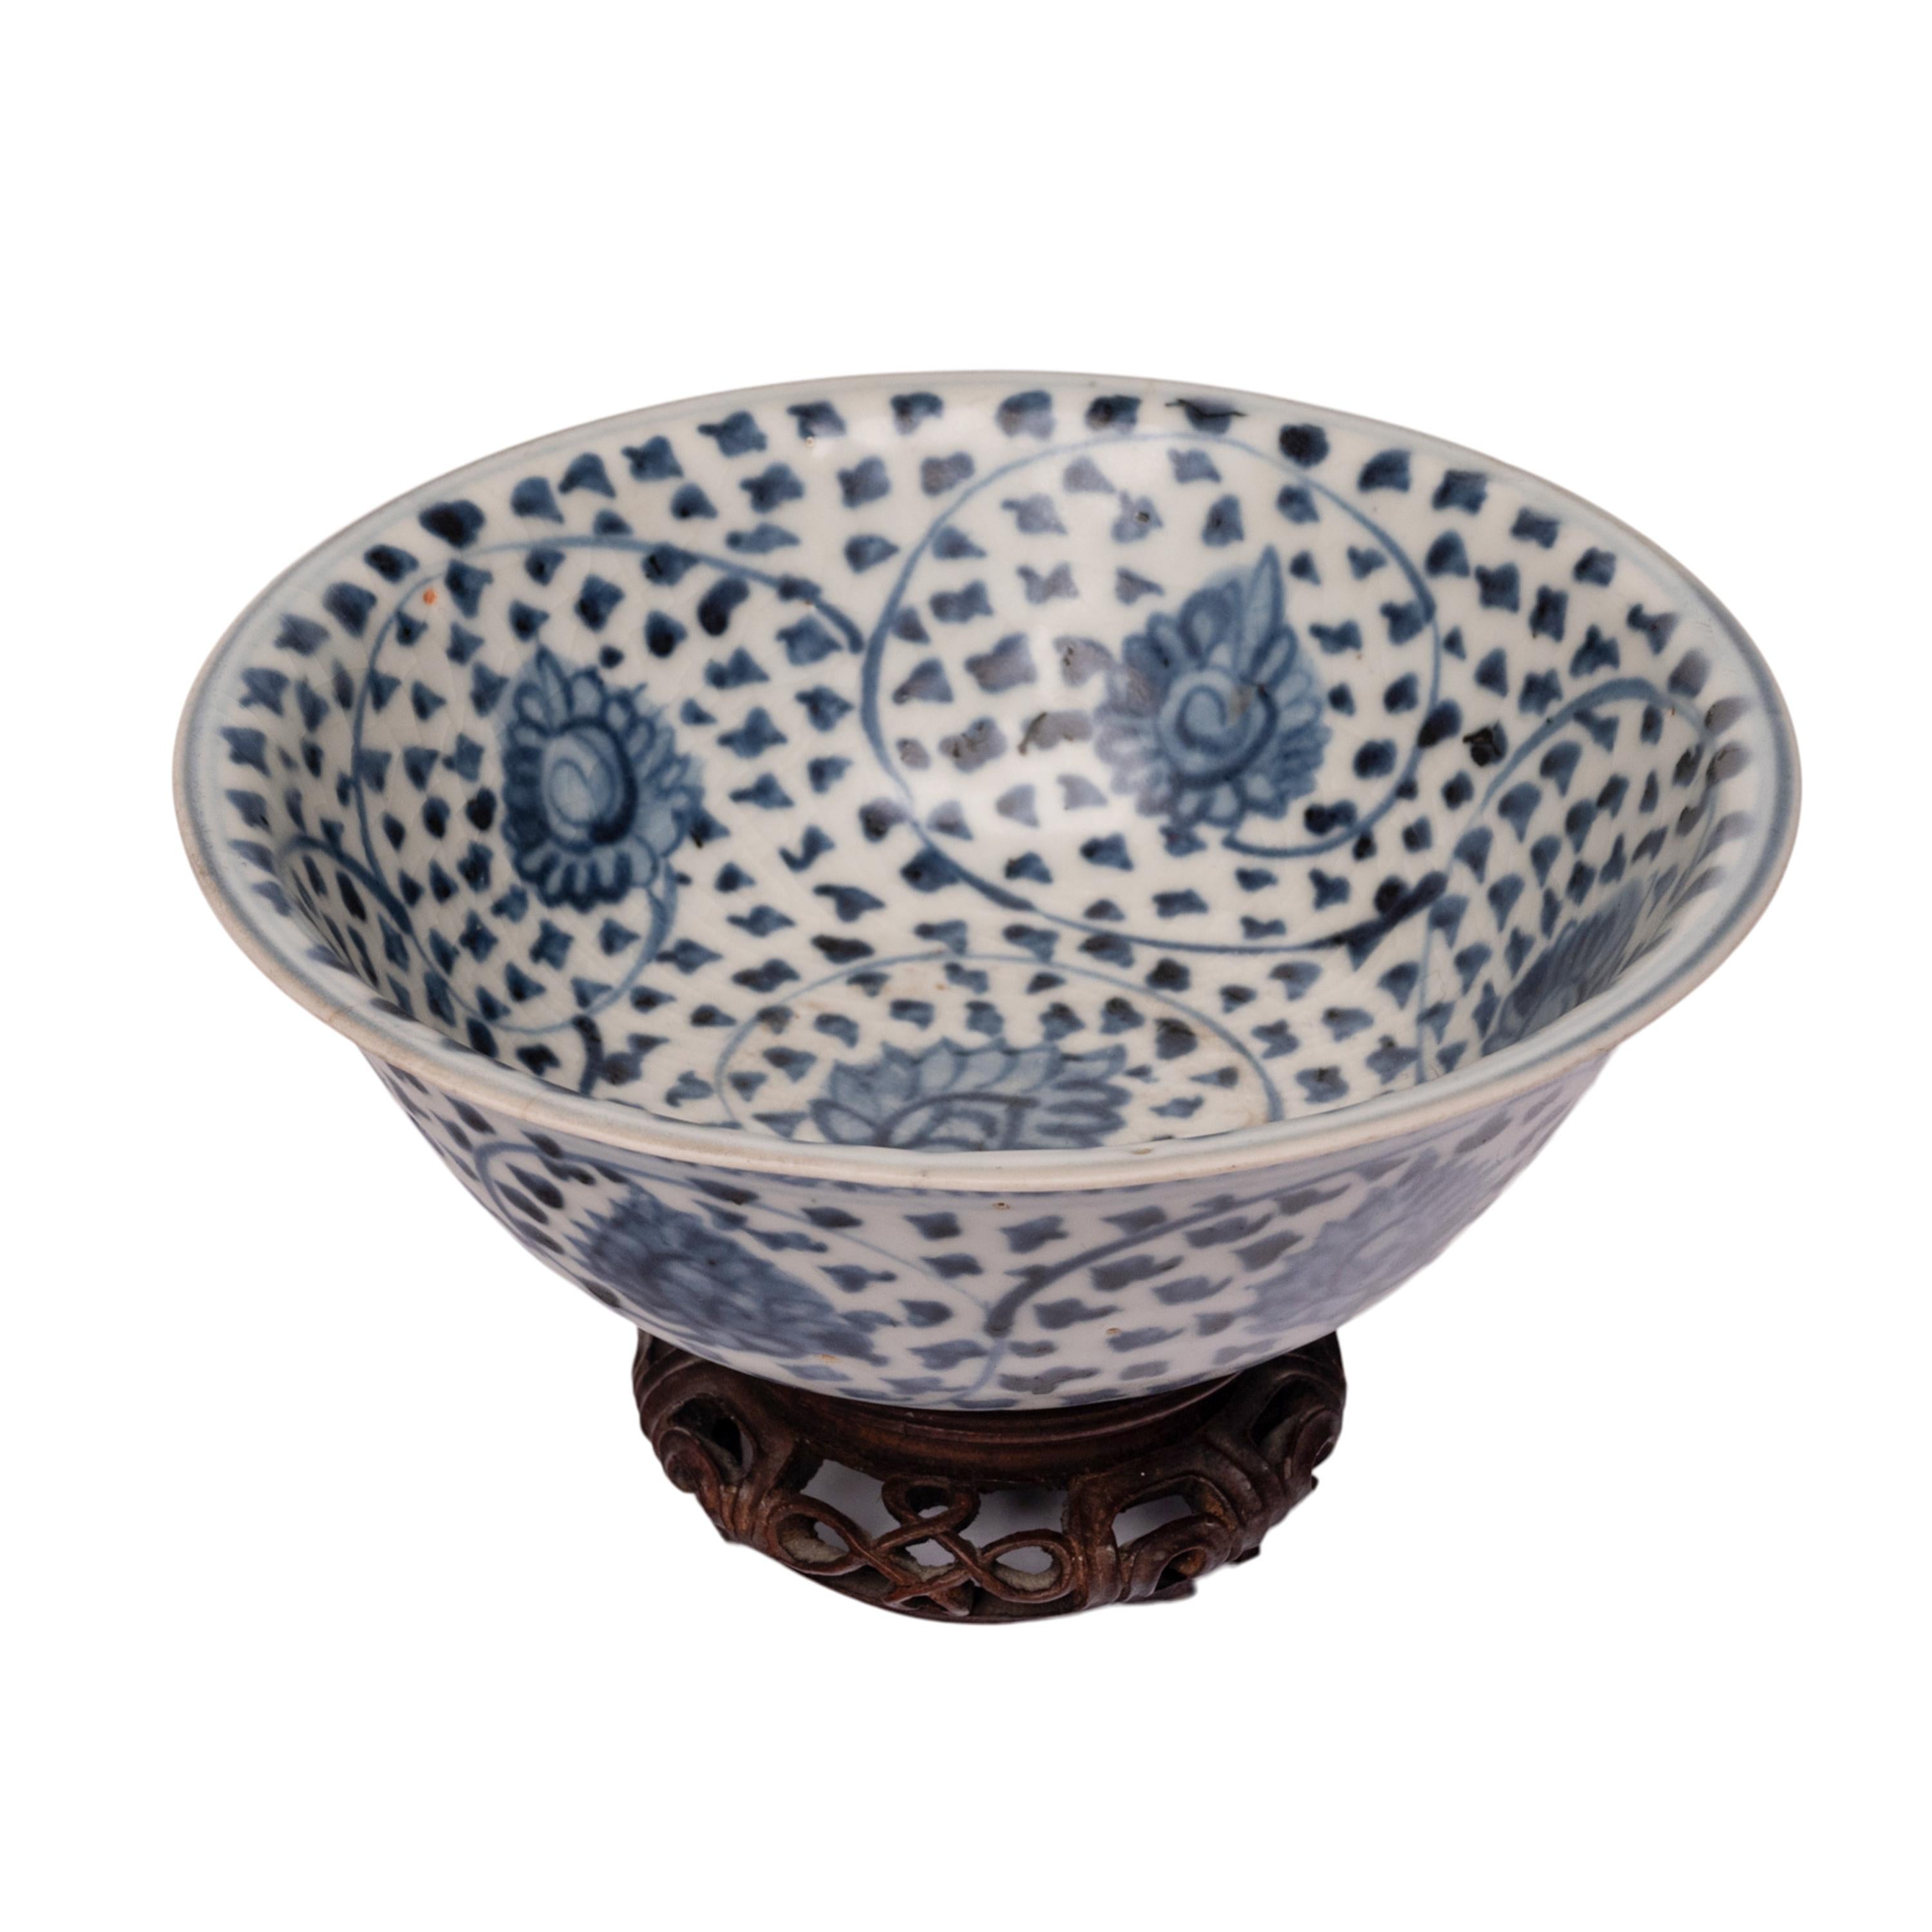 Glazed Antique Chinese Ming Dynasty Blue White Porcelain Bowl Islamic Market Circa 1550 For Sale